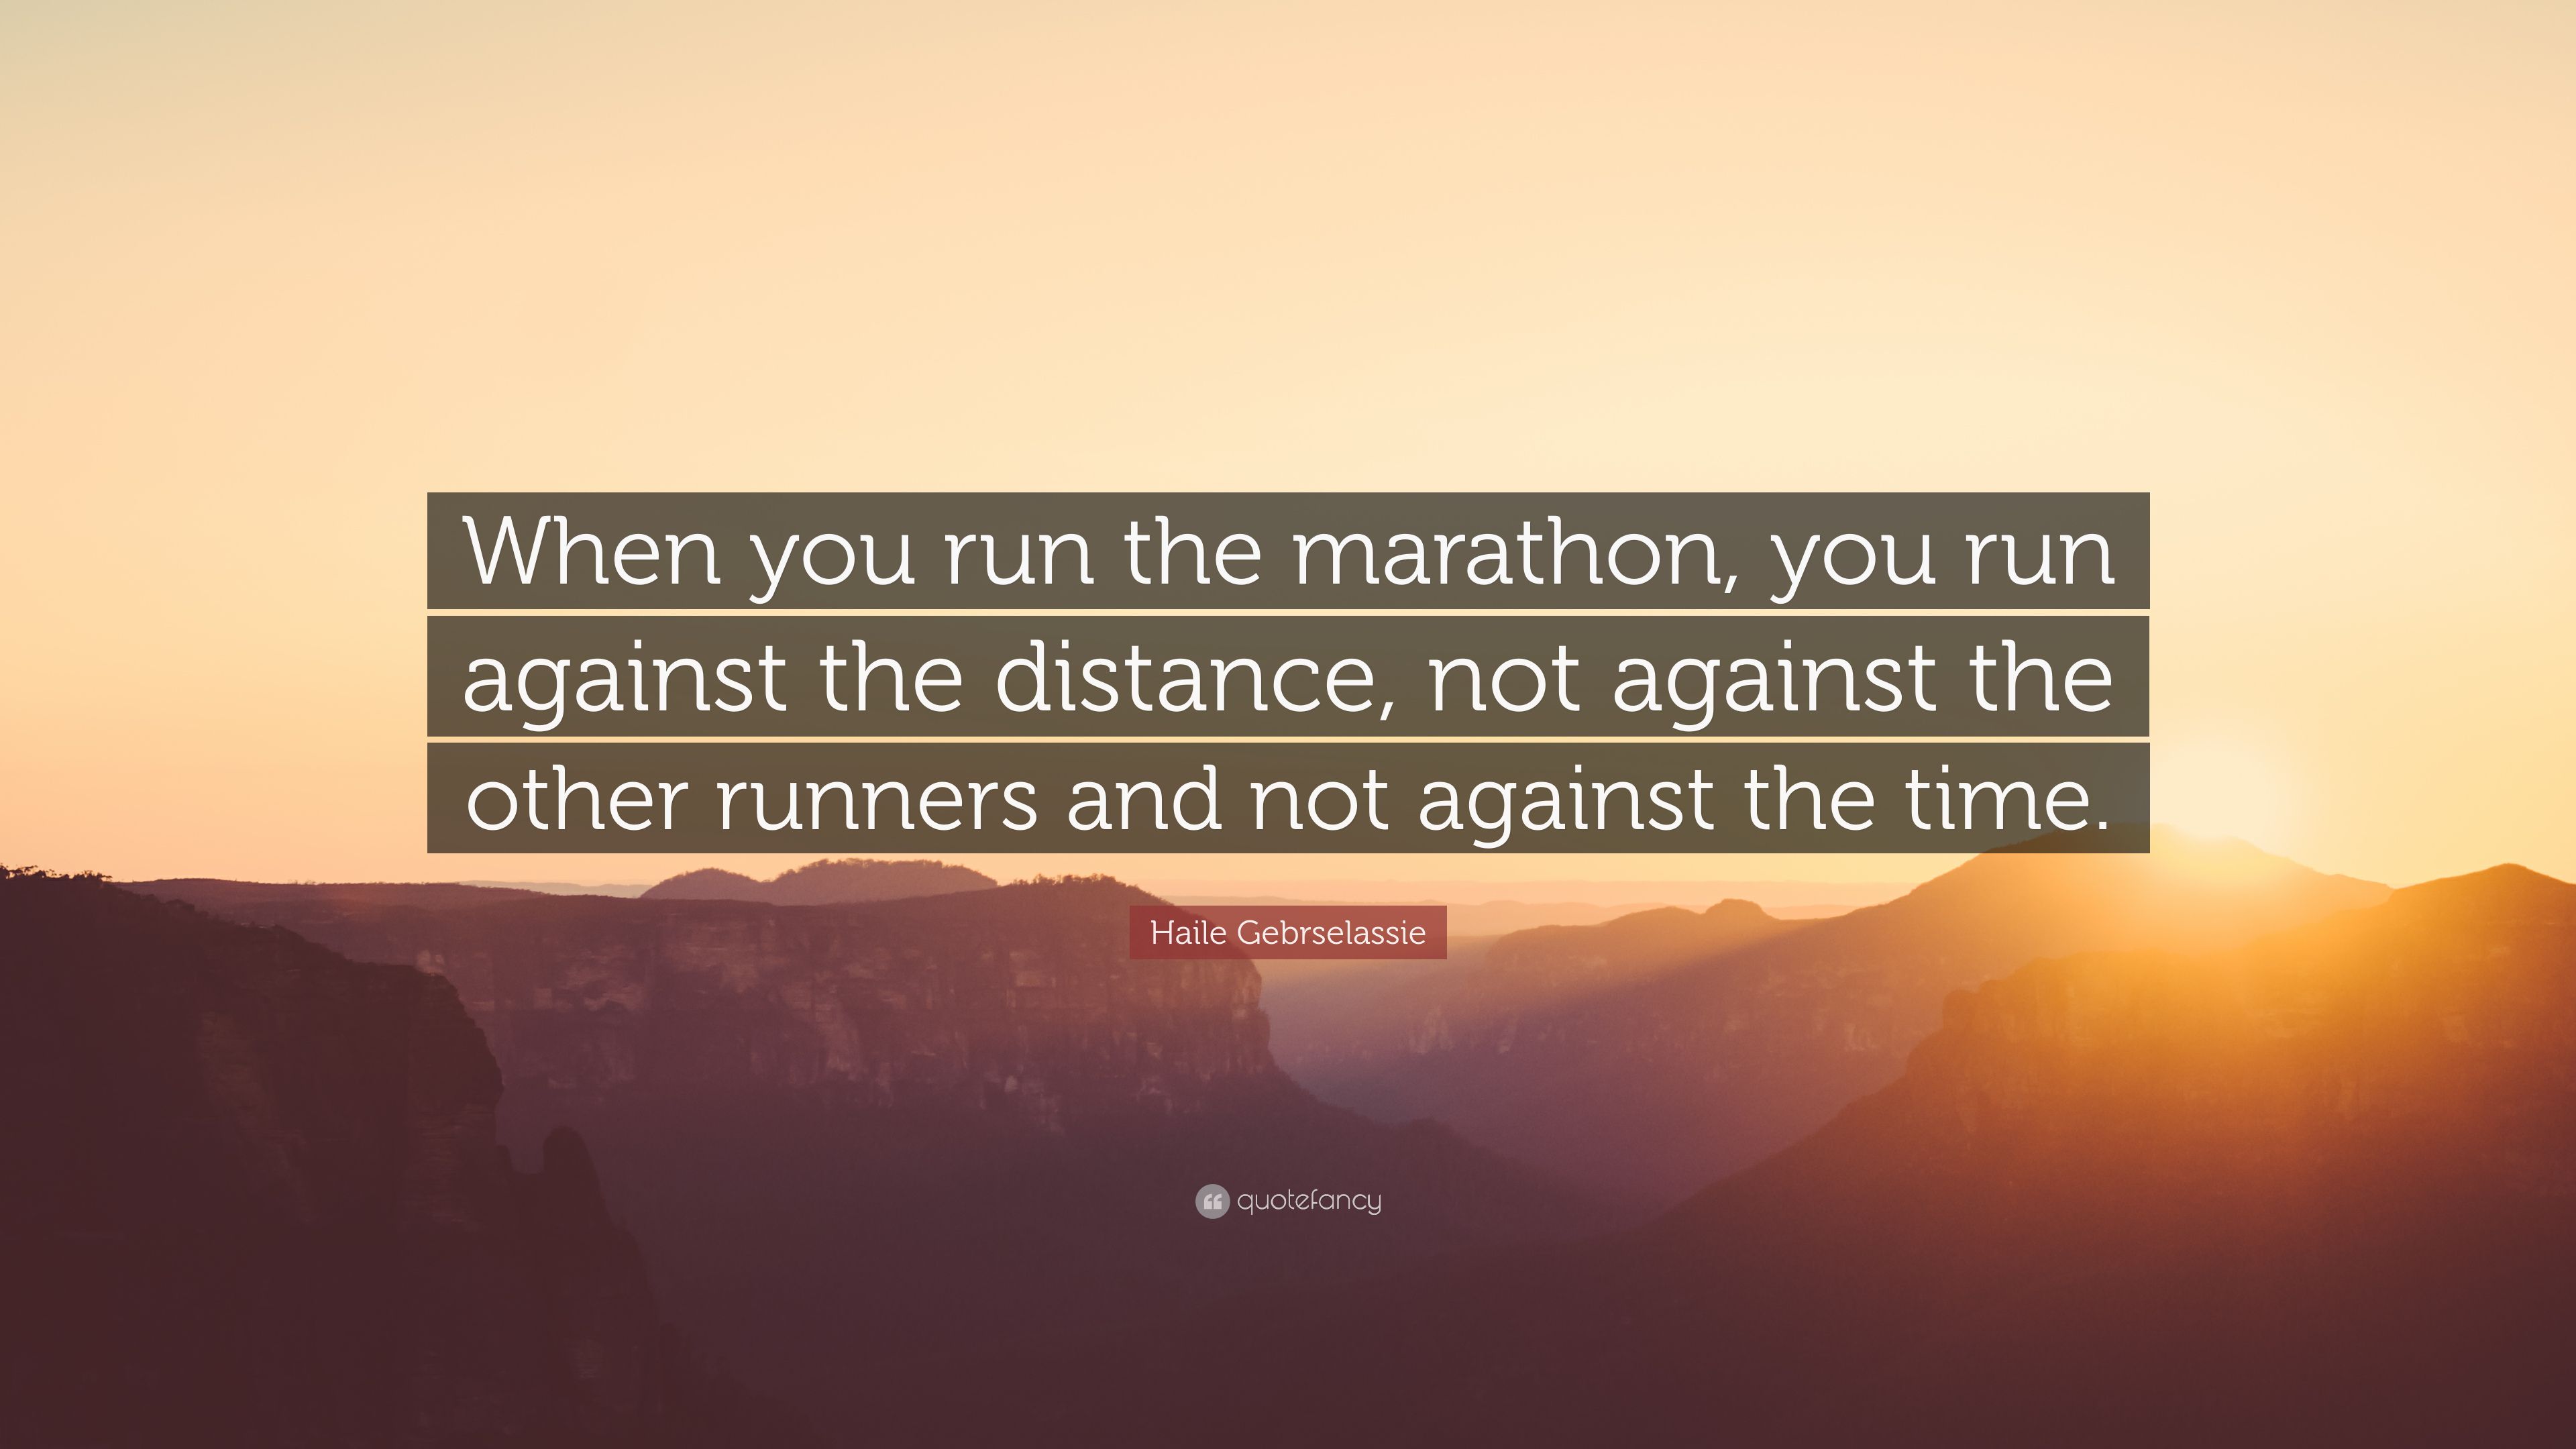 Haile Gebrselassie Quote: “When you run the marathon, you run